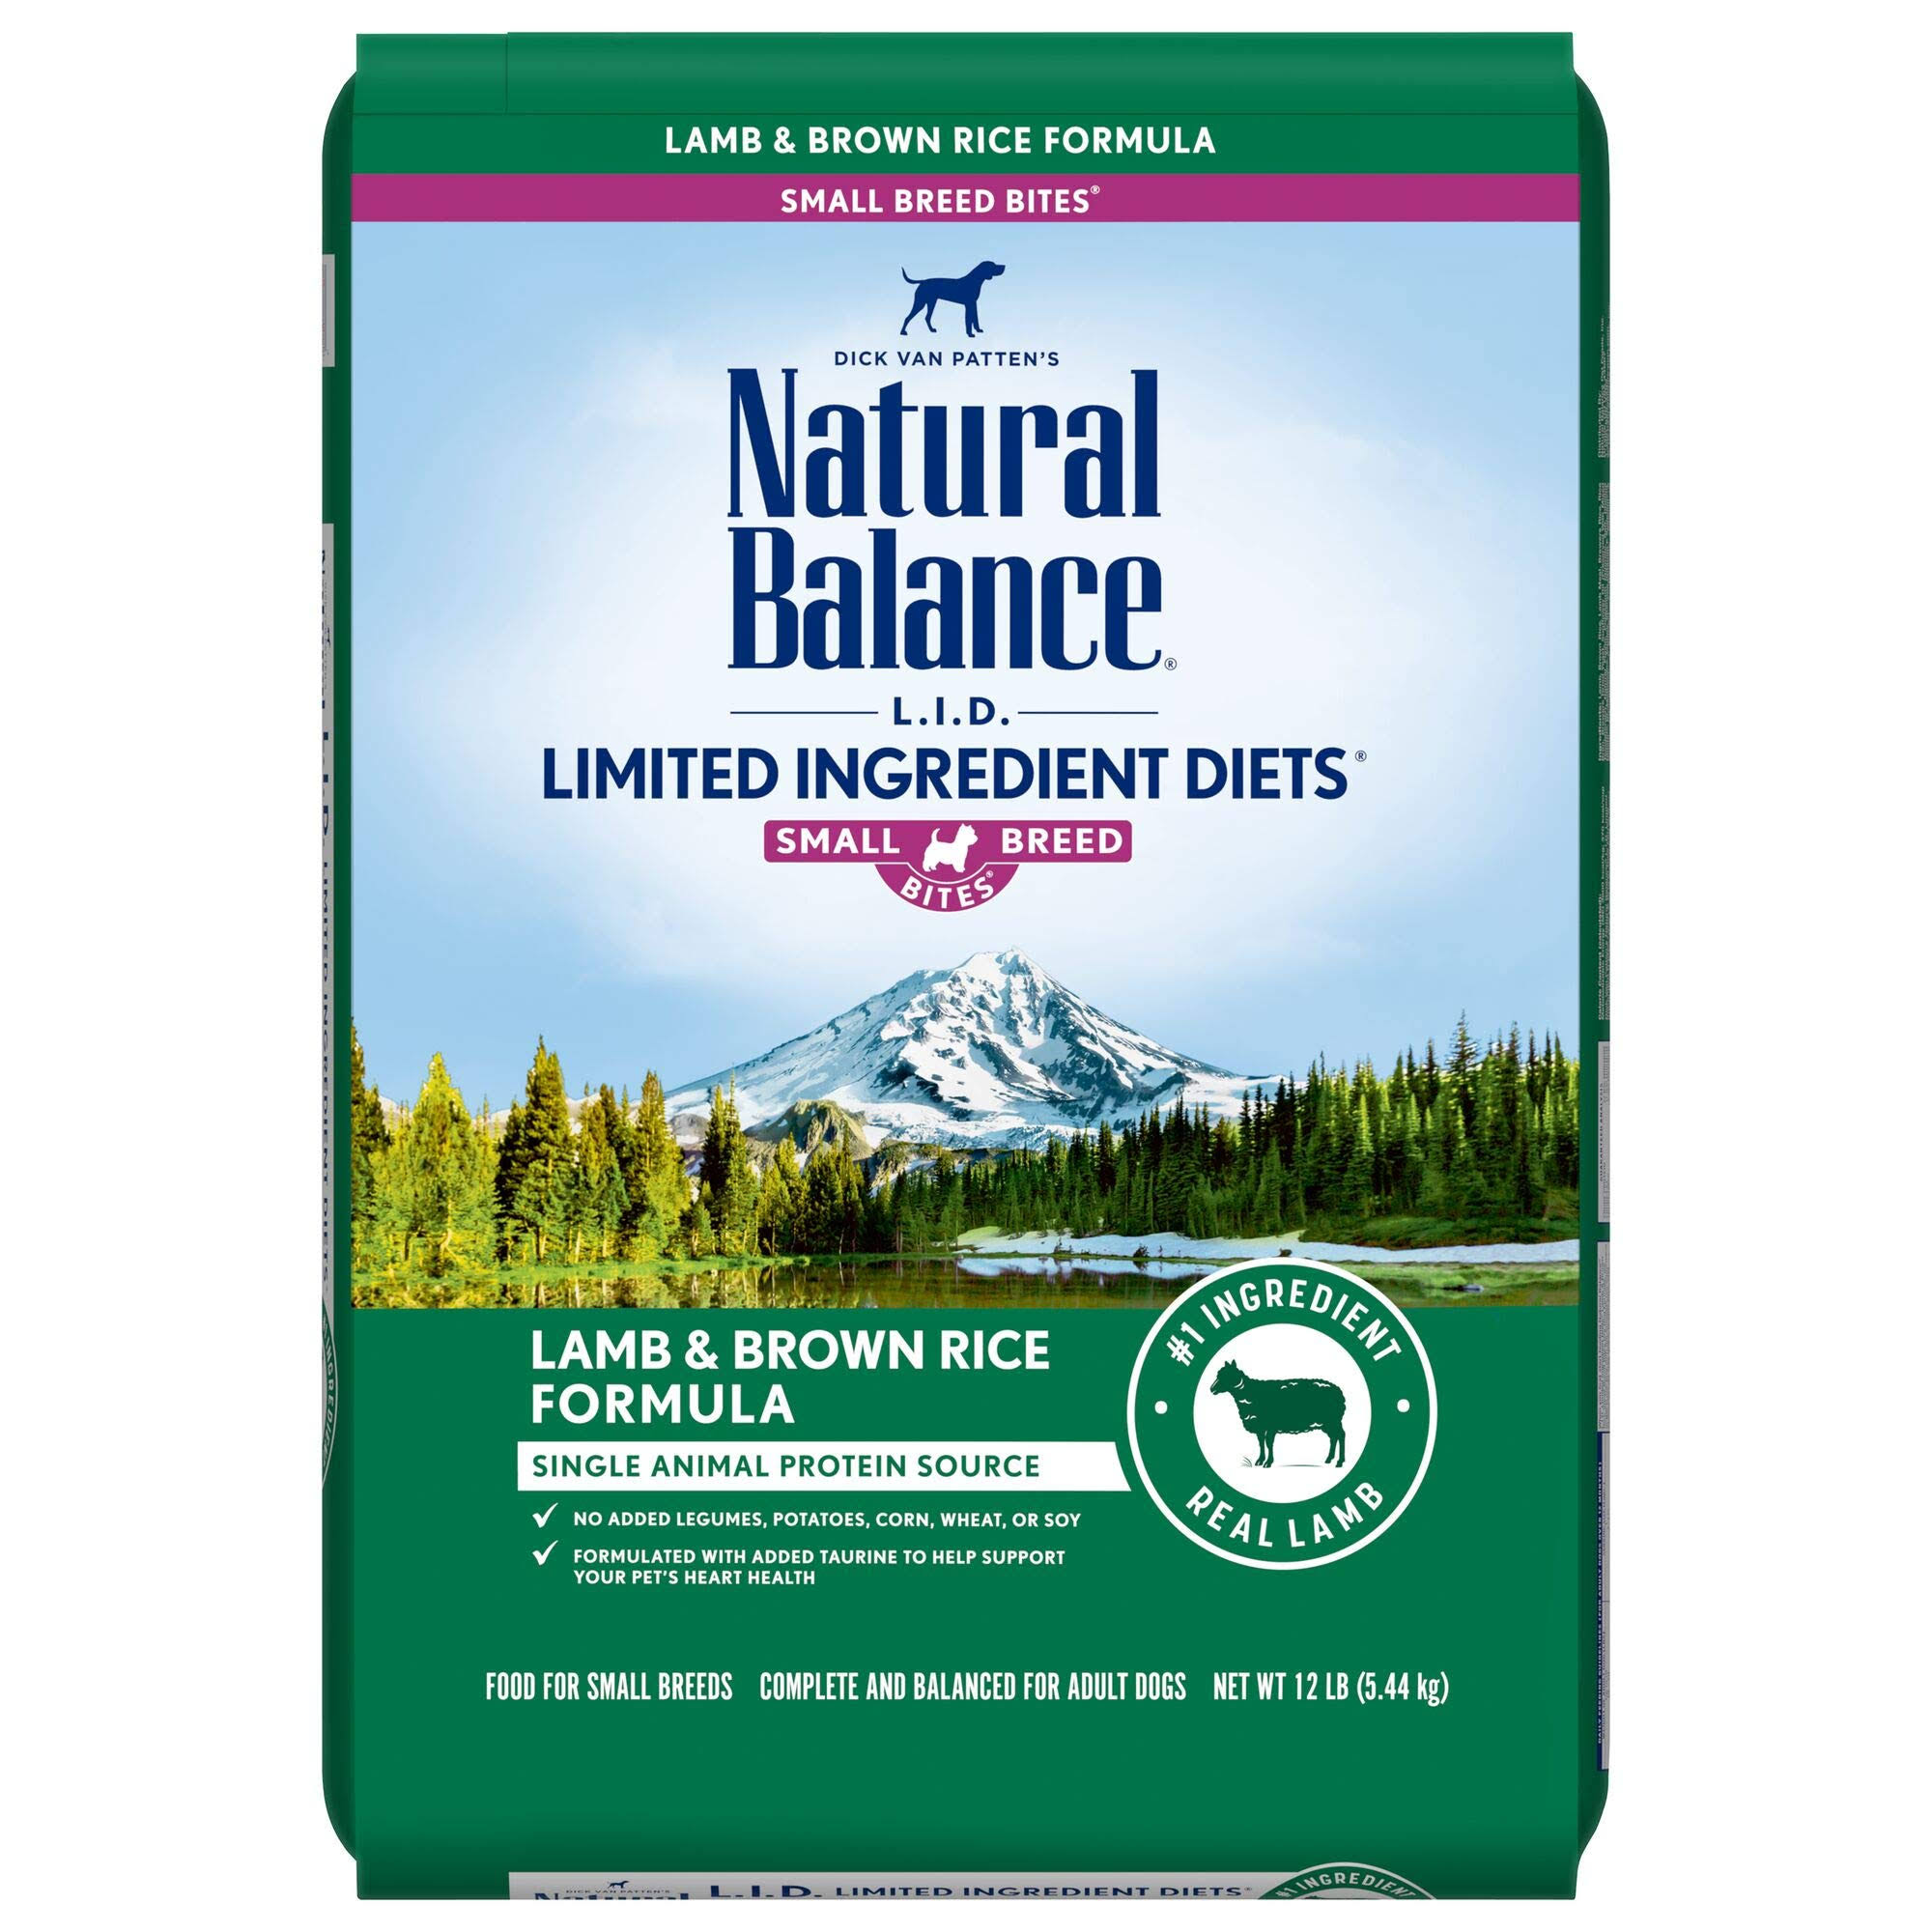 Natural Balance L.I.D. Limited Ingredient Diets Dog Food, Lamb & Brown Rice Formula, Small Breed Bites - 12 lb